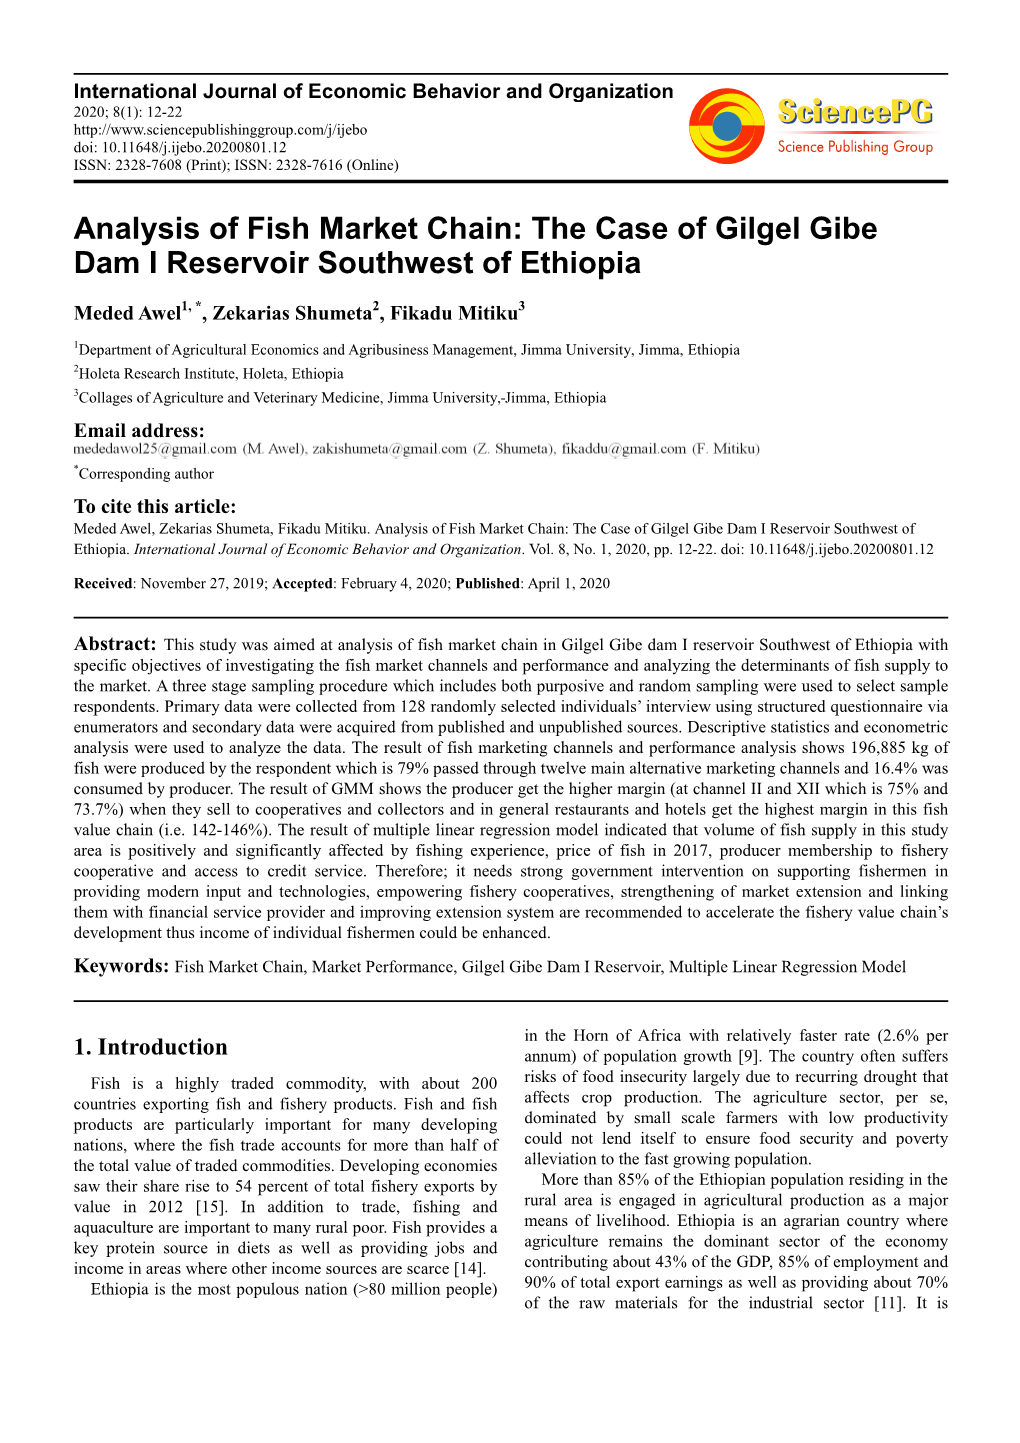 Analysis of Fish Market Chain: the Case of Gilgel Gibe Dam I Reservoir Southwest of Ethiopia